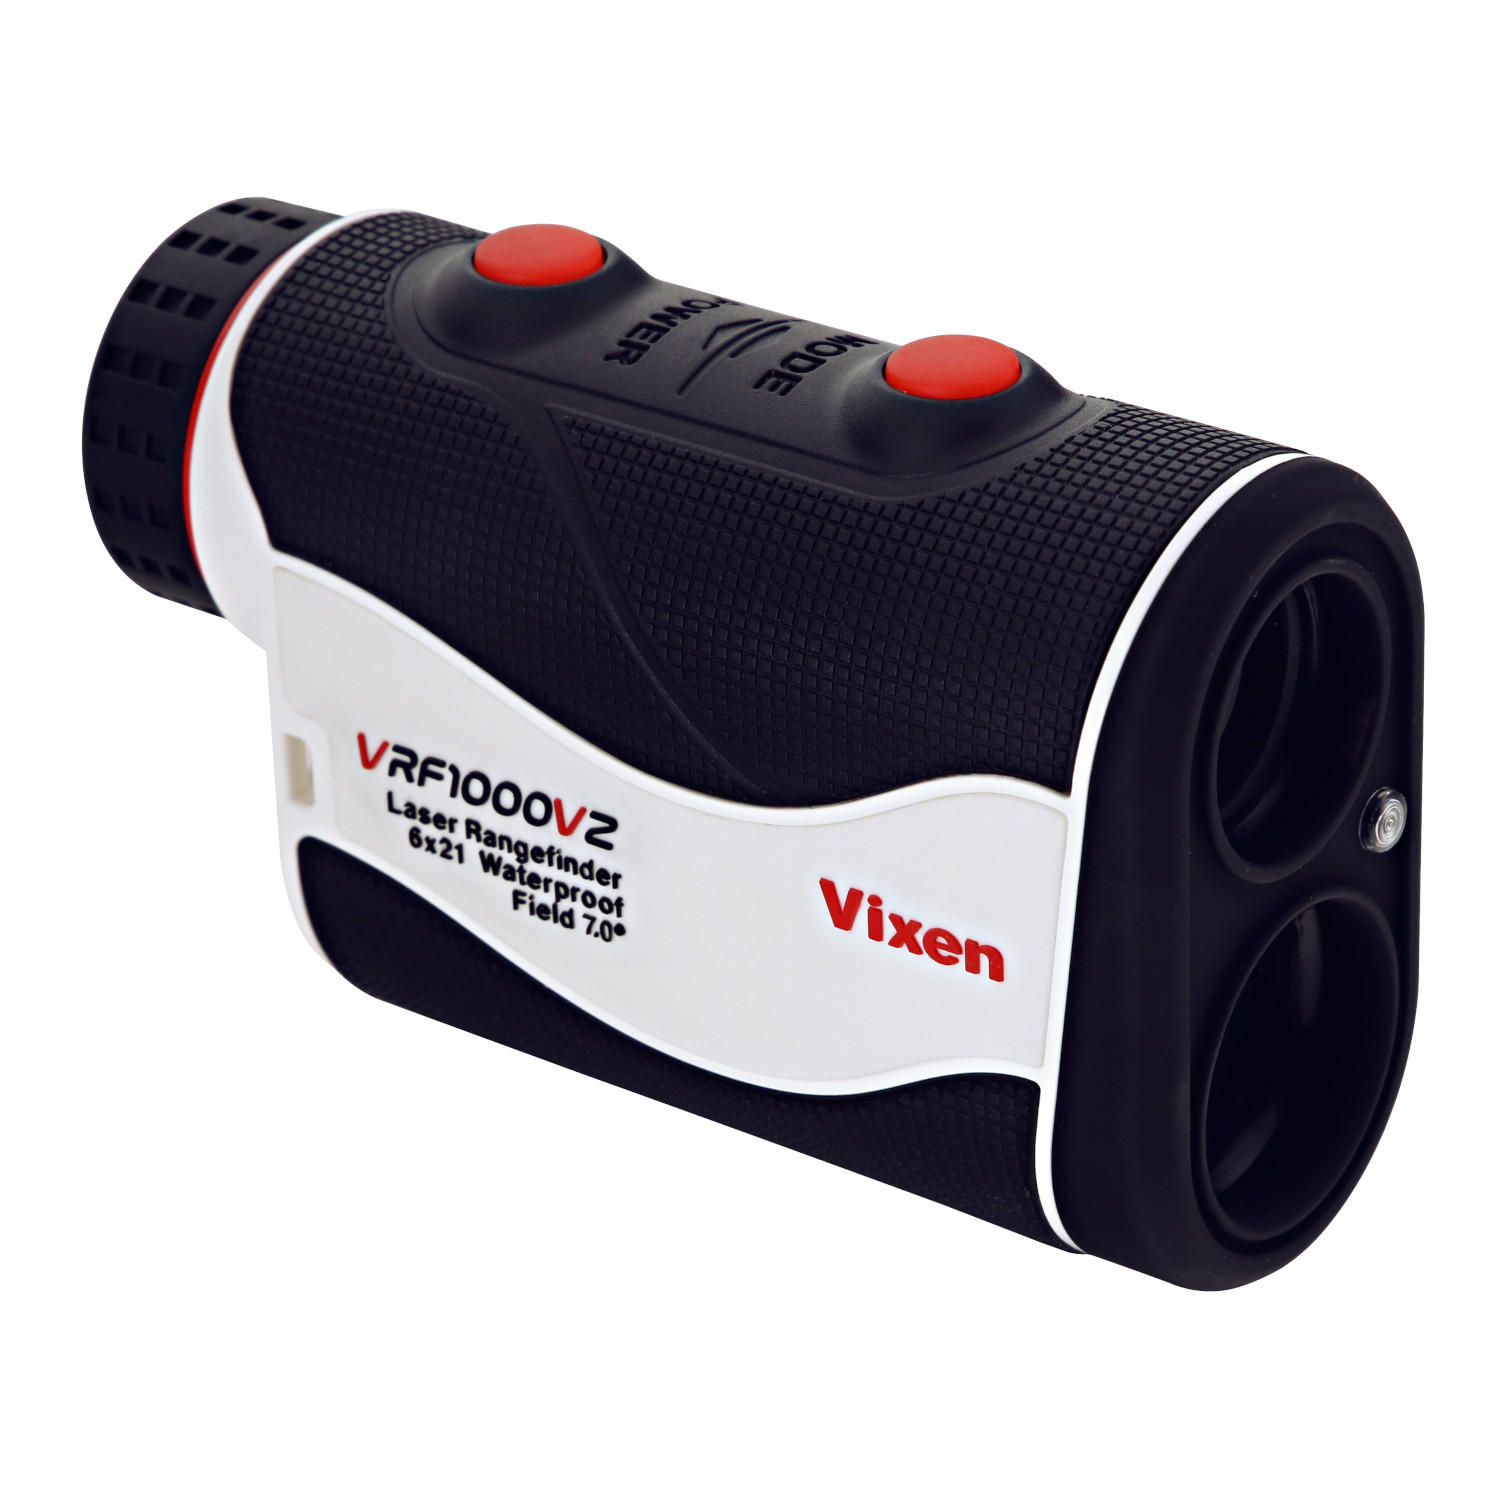 Vixen 単眼鏡 レーザー距離計 VRF1000VZ | ビクセン オンライン